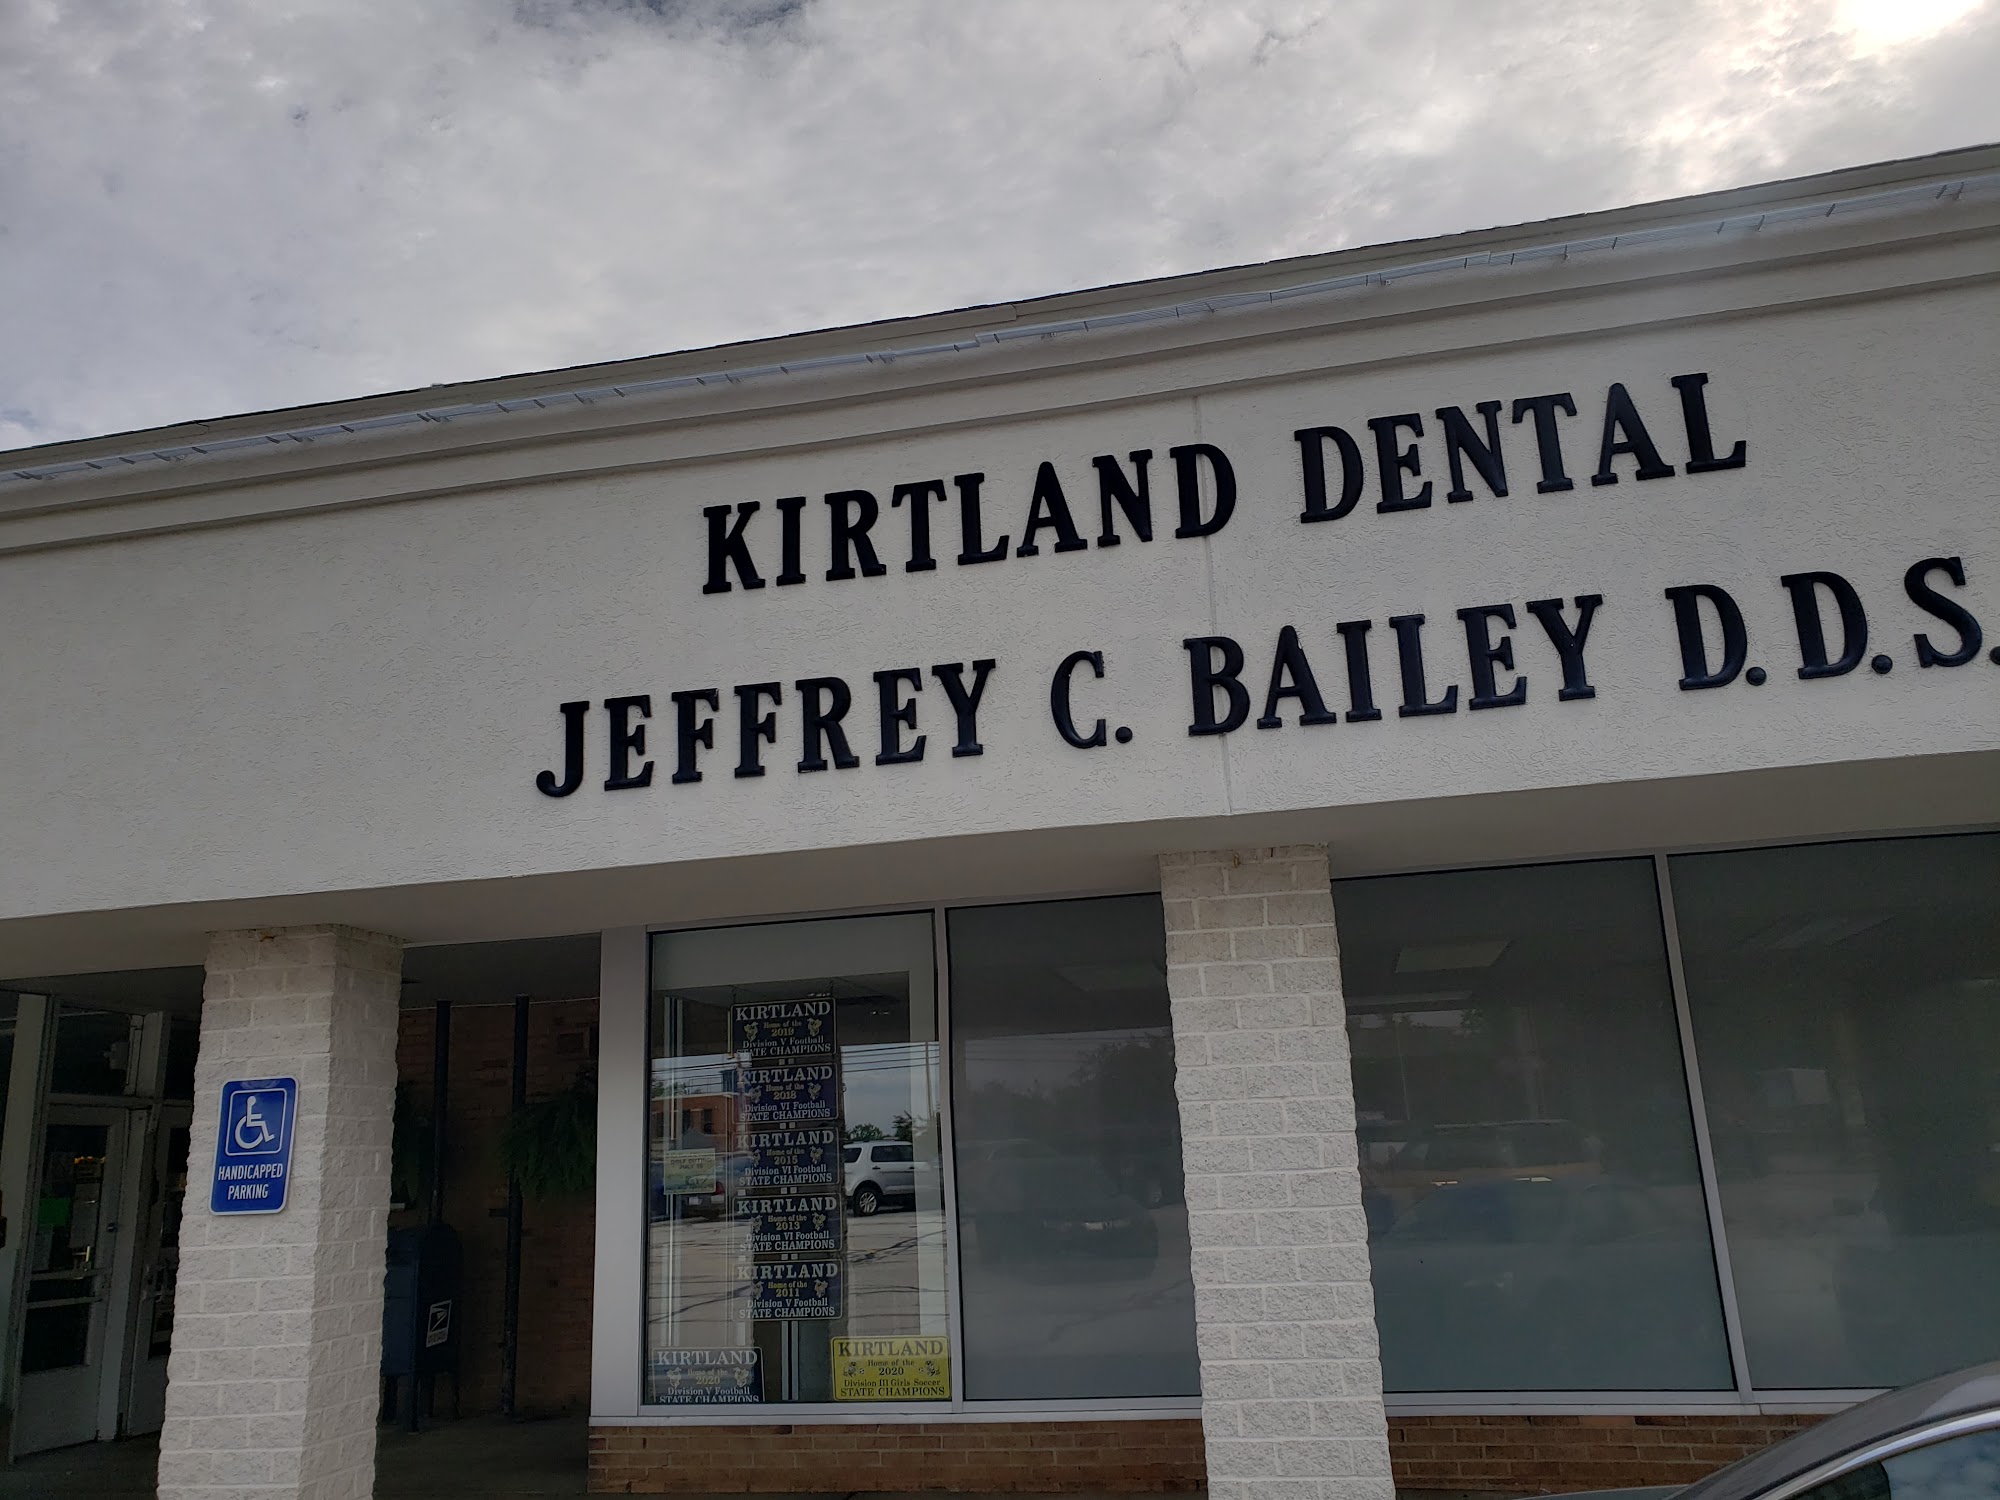 Kirtland Dental Jeffrey C. Bailey DDS